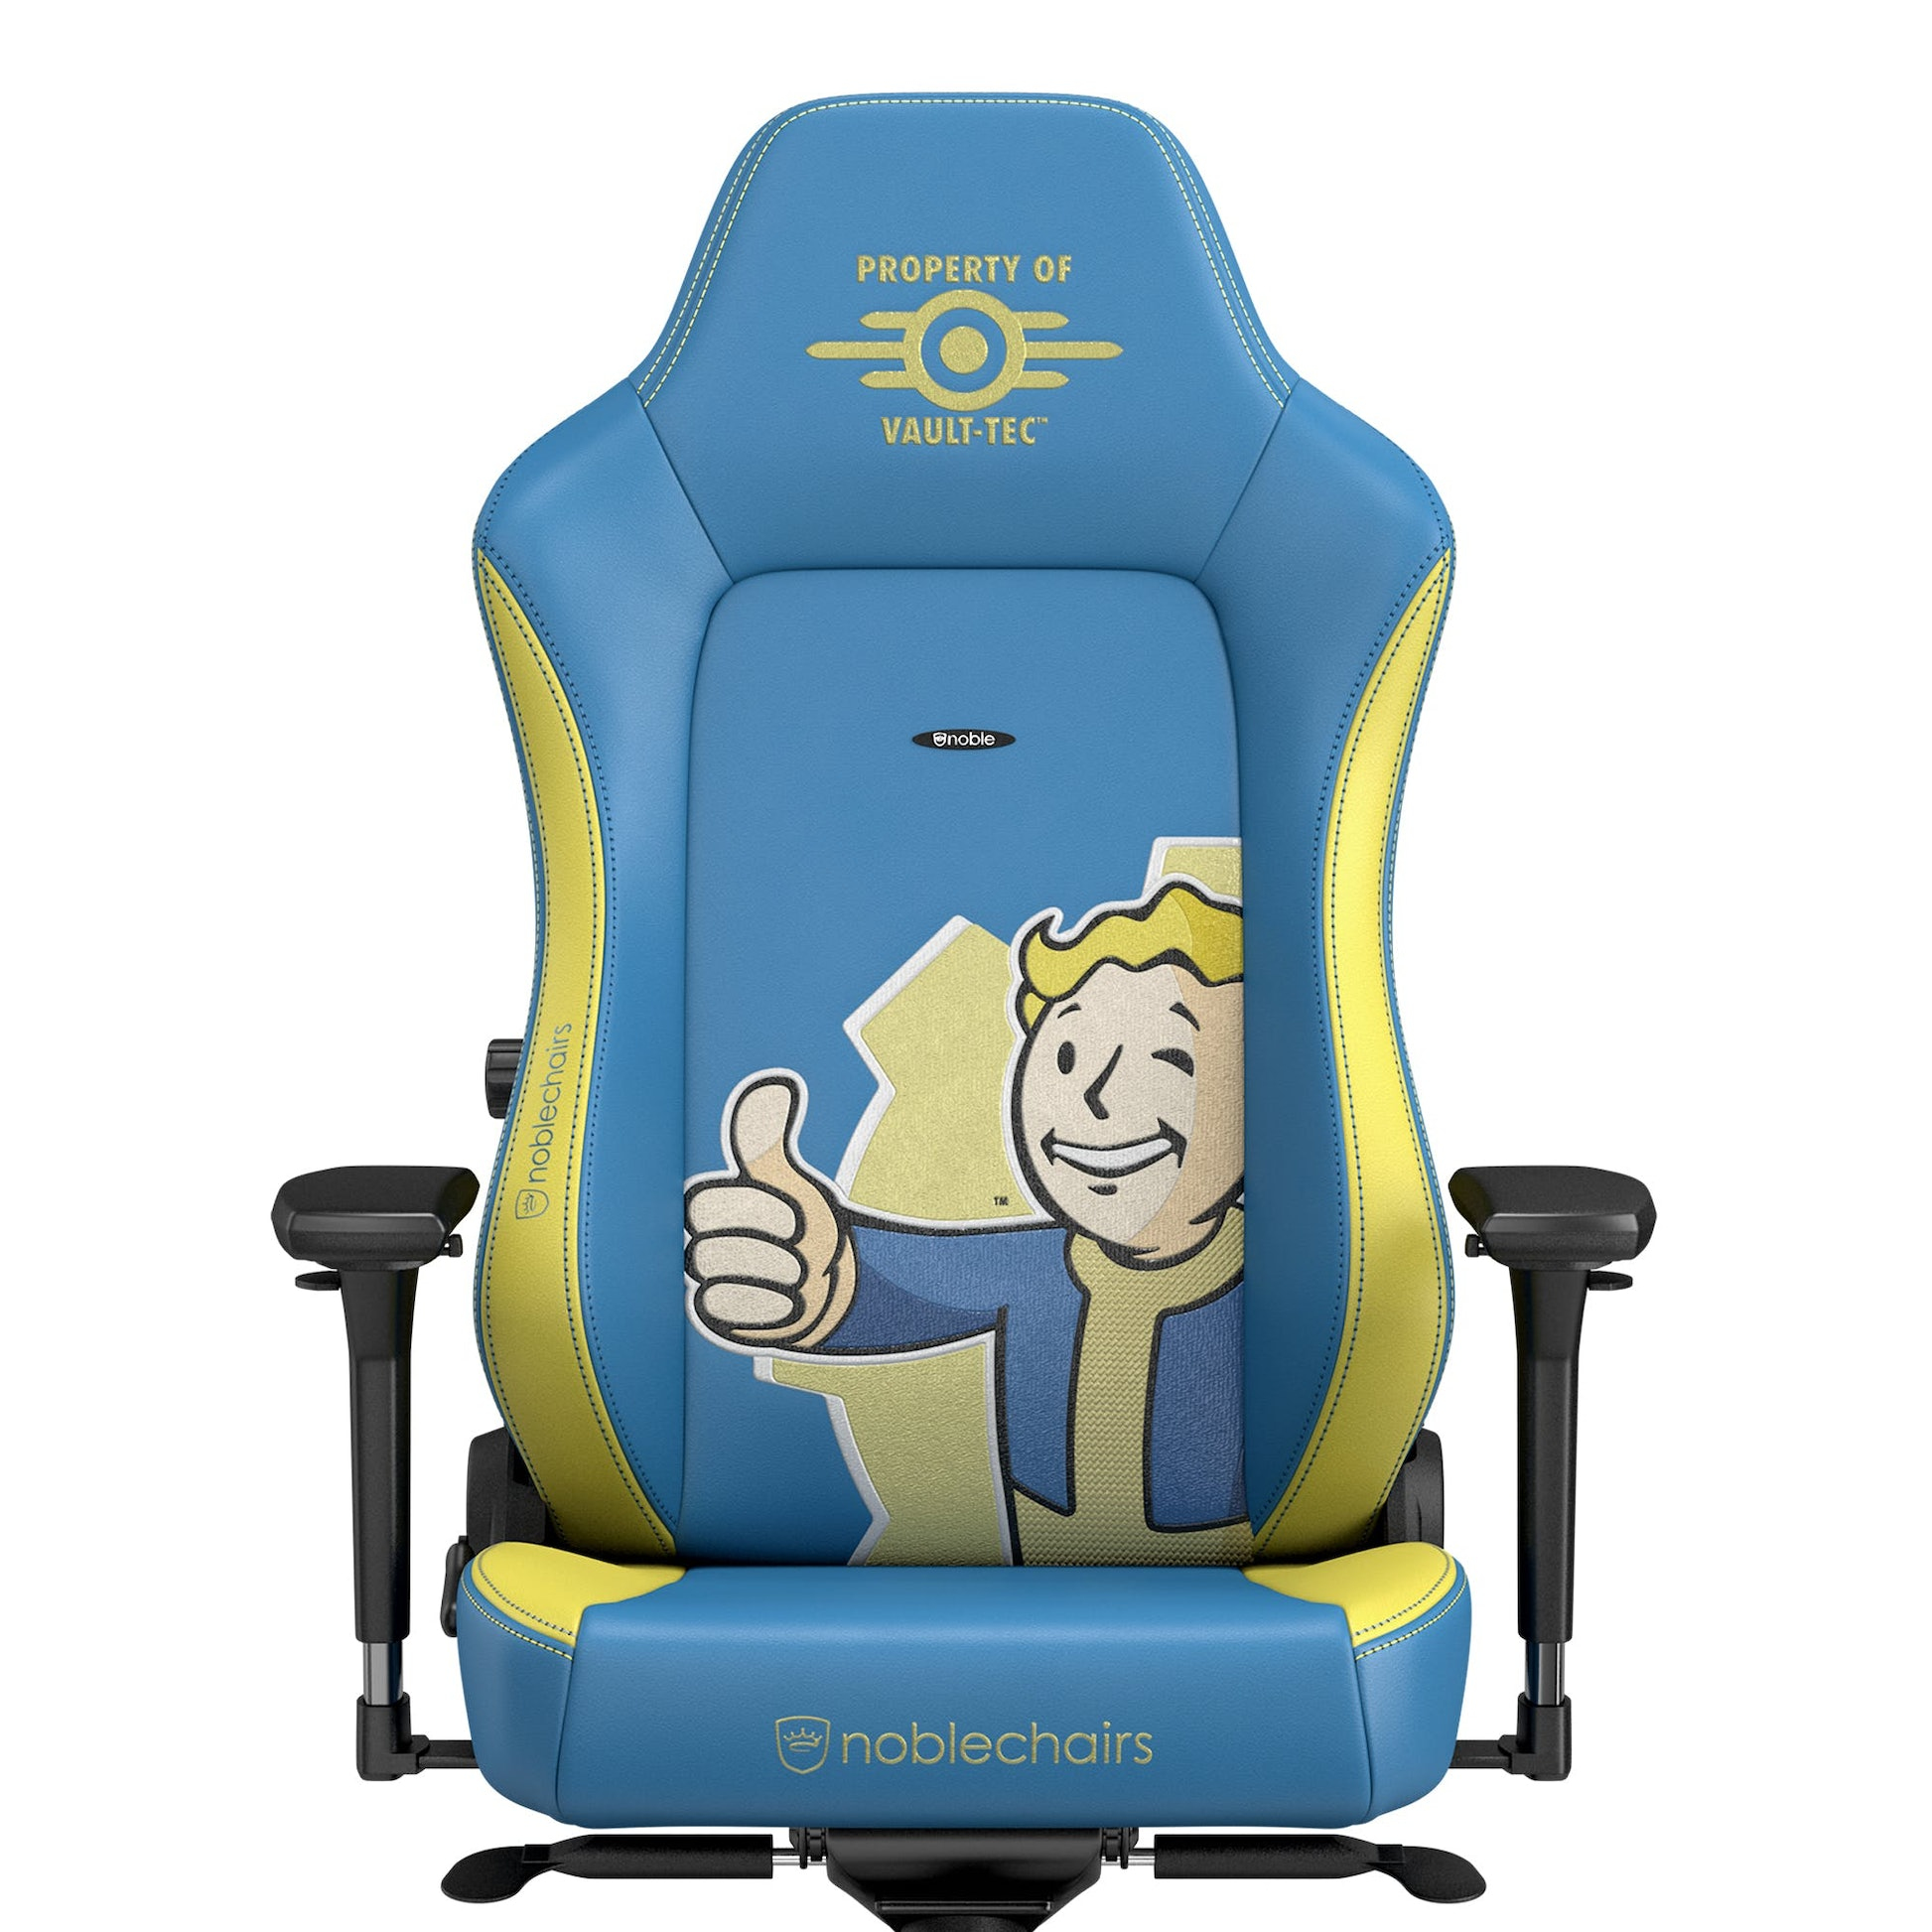 noblechairs - Cadeira noblechairs HERO - Fallout Vault-Tec Edition